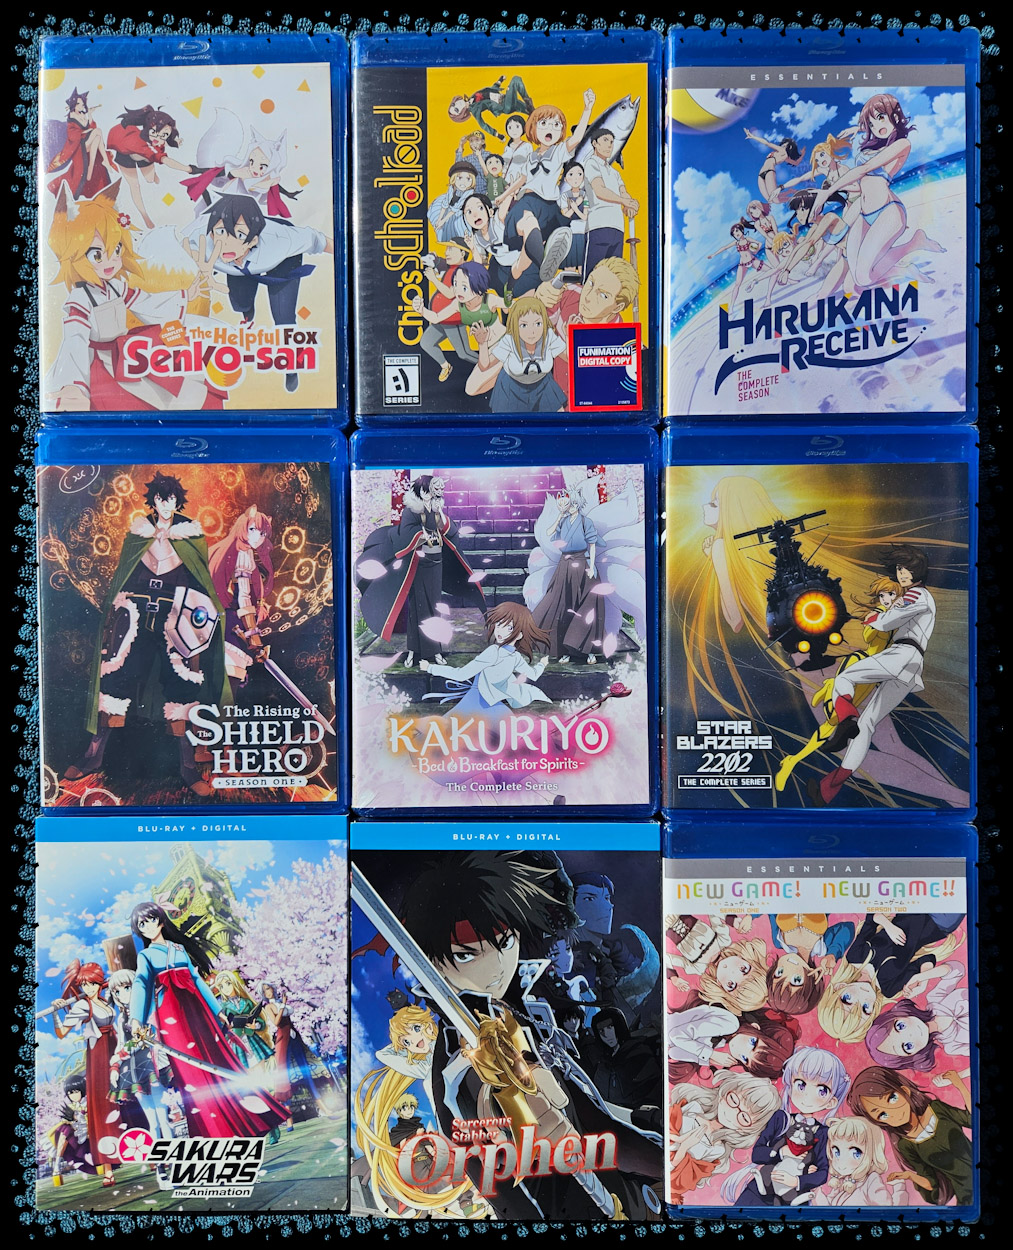 Harukana Receive - The Complete Season - Essentials - Blu-ray